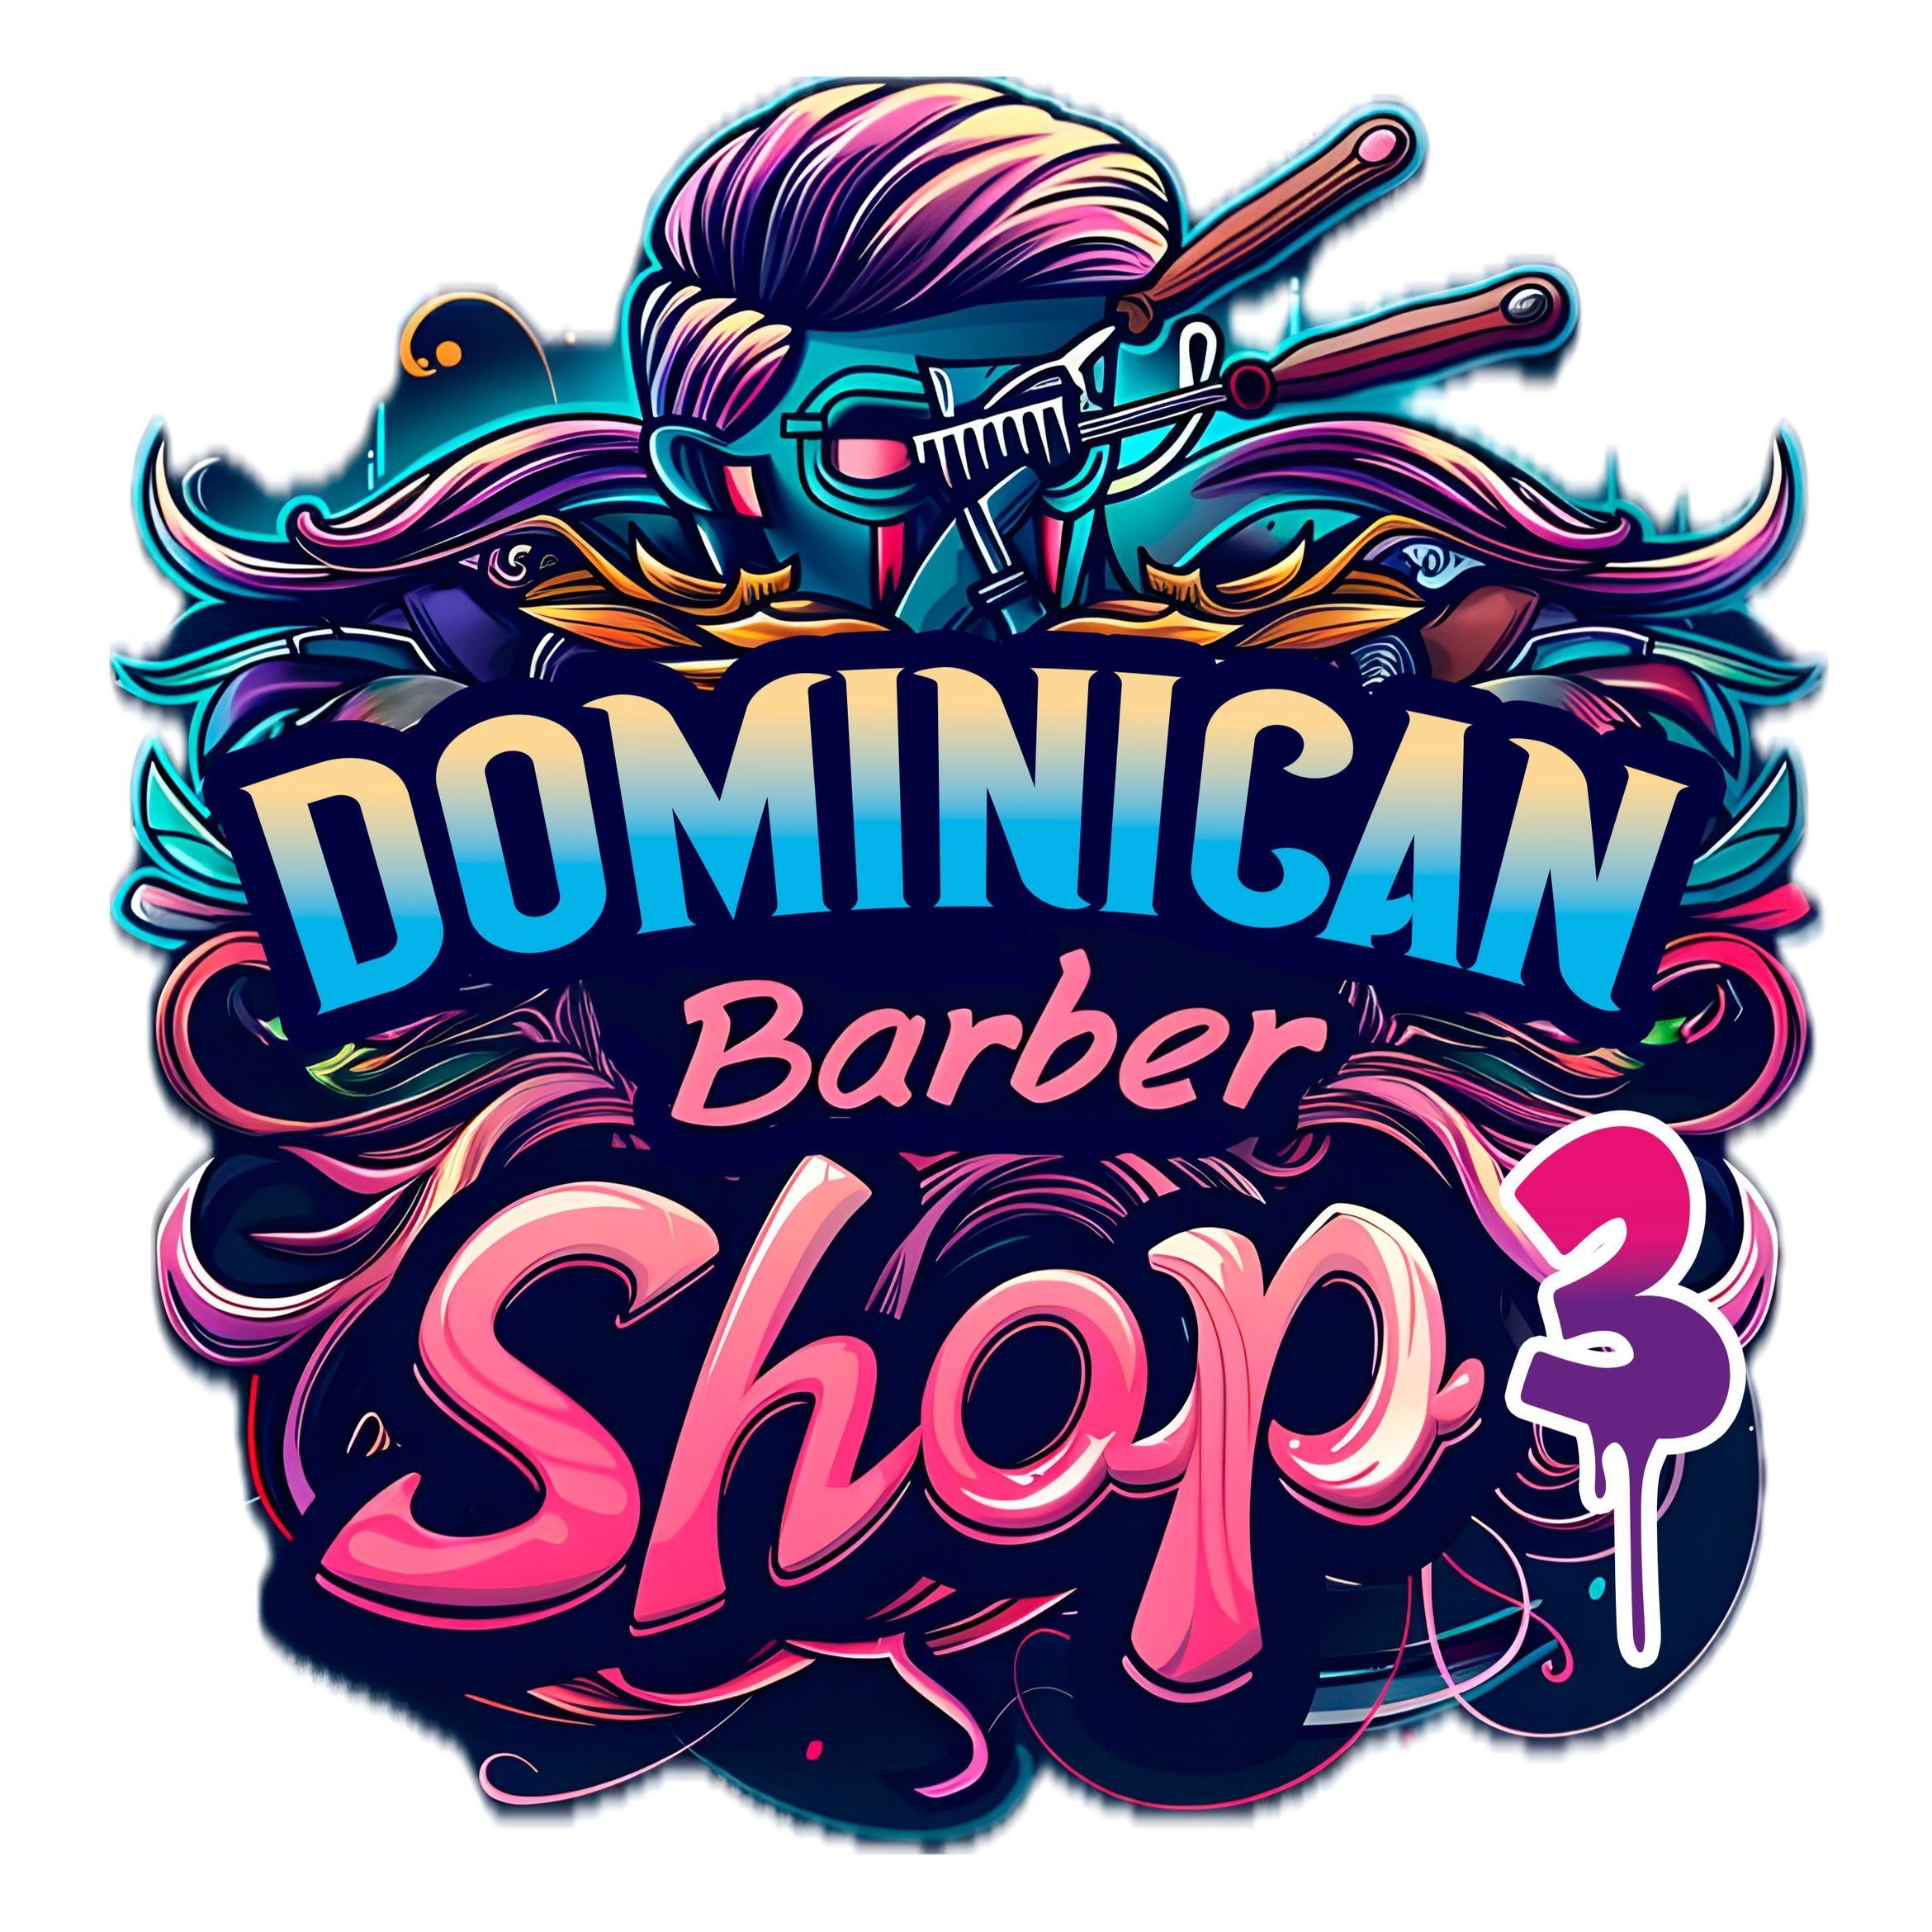 Dominican barber shop 3, 209 west main street Suite 112 grand praire, Grand Prairie, 75050